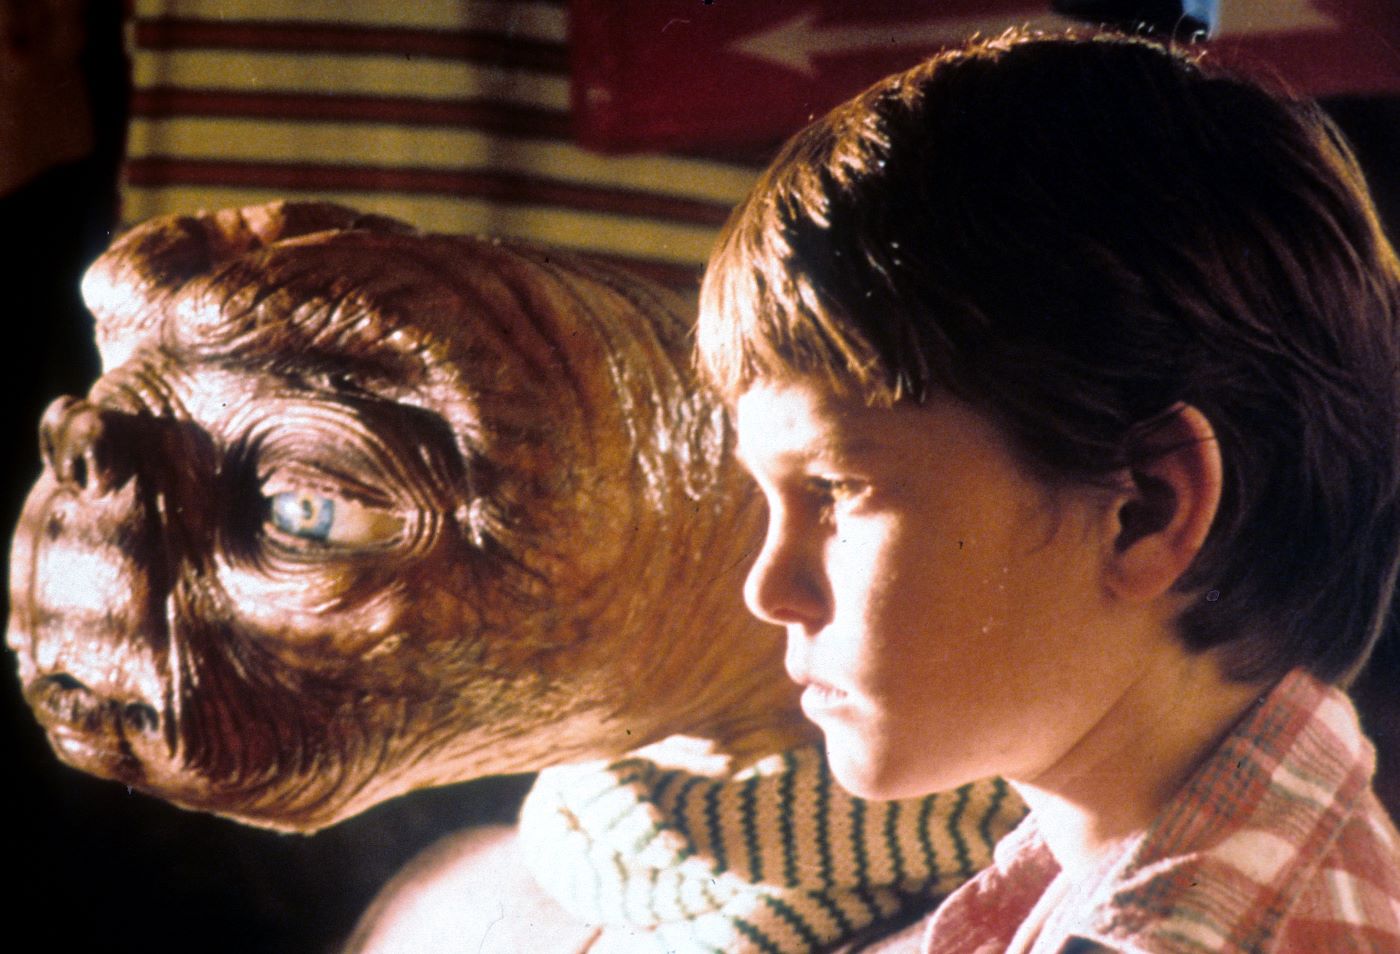 Original animatronic 'E.T.' model used in Spielberg classic sells